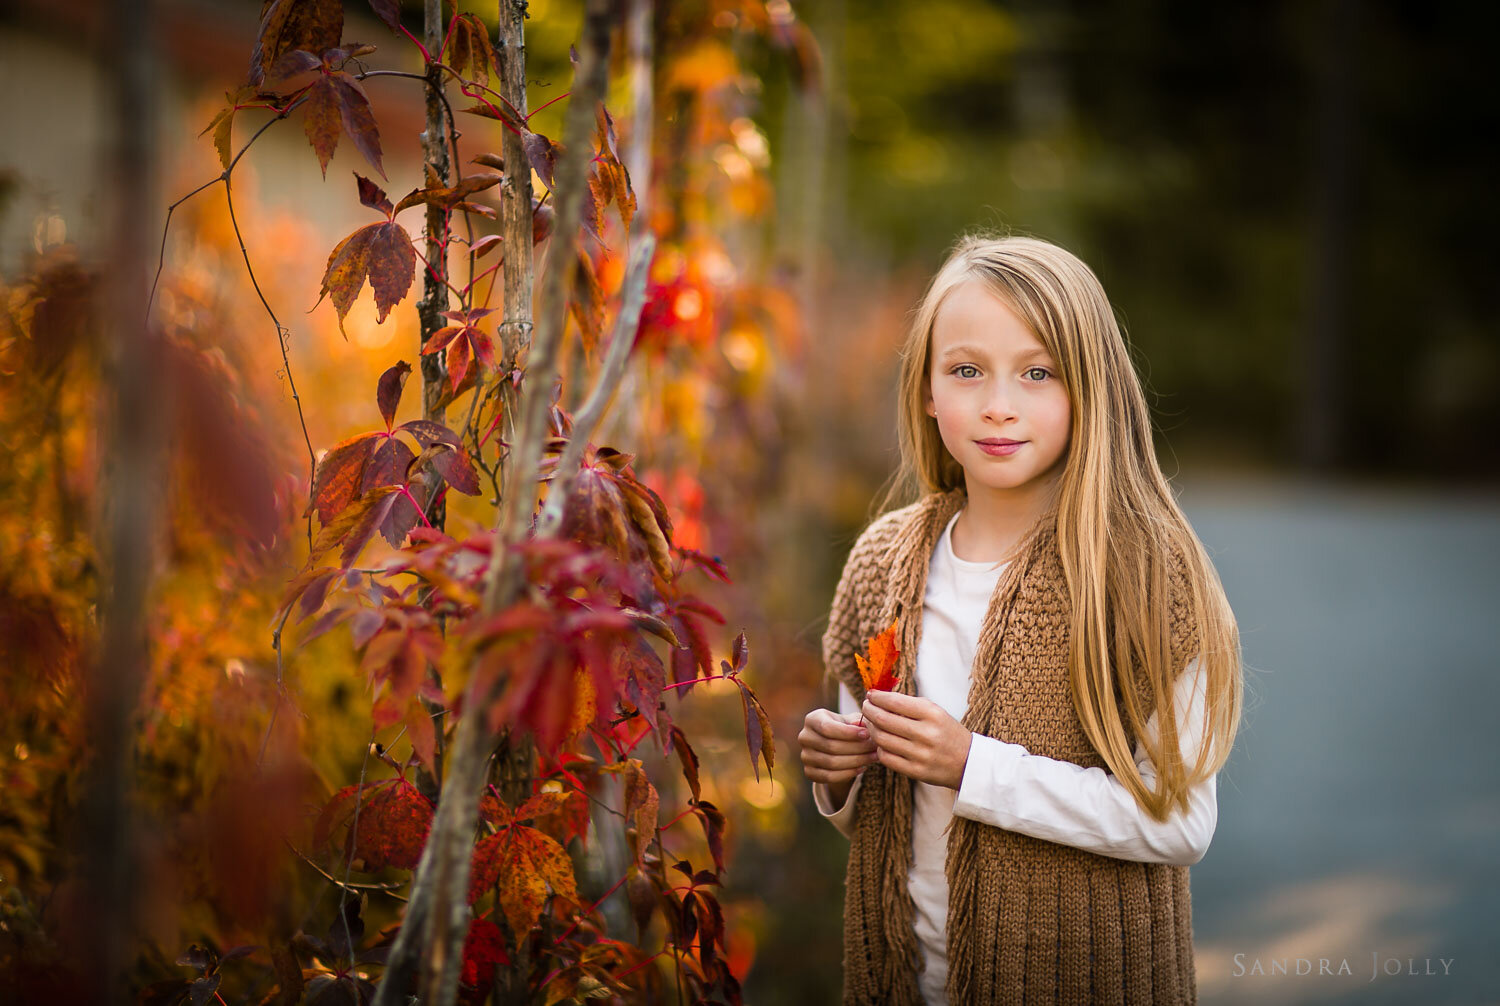 colourful-autumn-portrait-of-girl-by-stockholm-photographer-sandra-jolly-photography.jpg